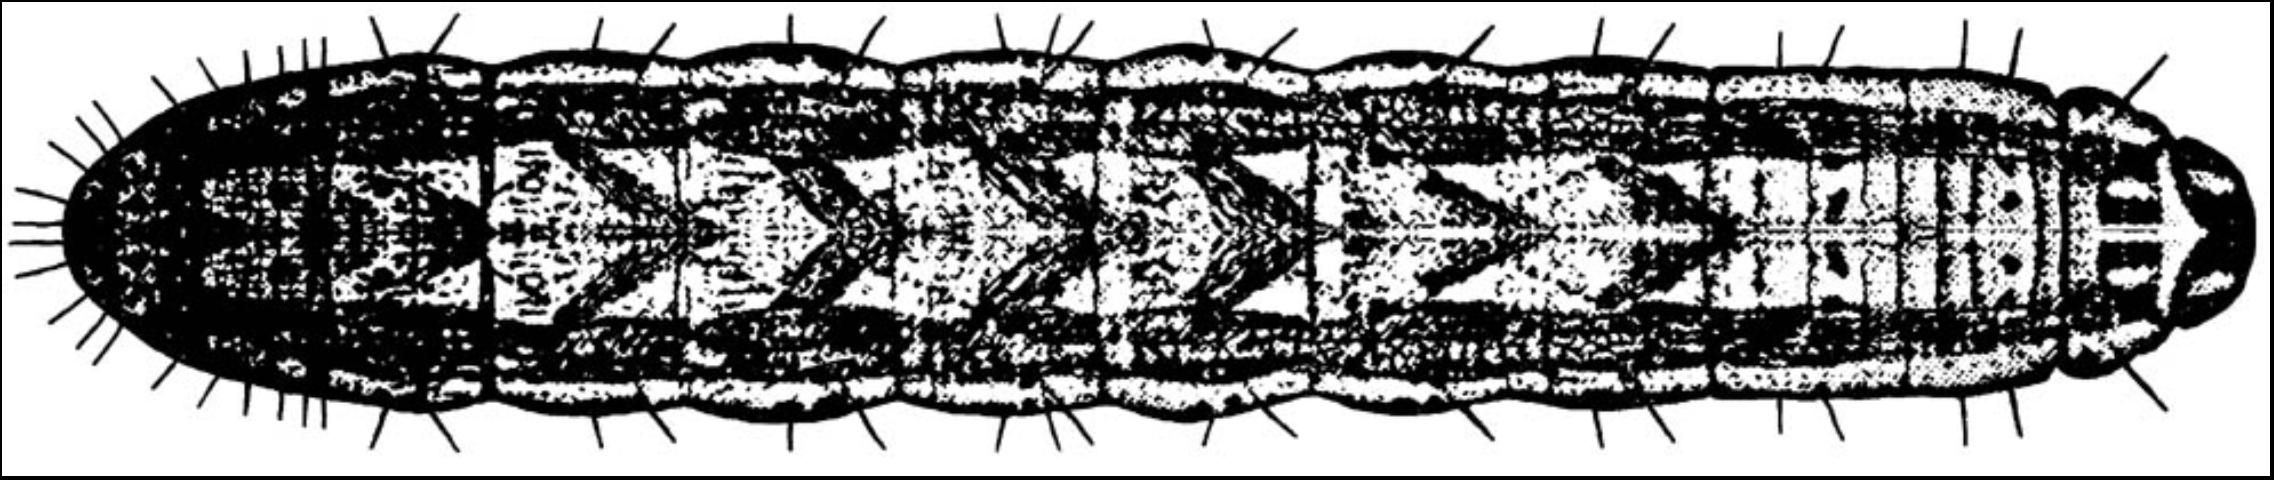 Figure 4. Granulate cutworm larva, Feltia subterranea (F.).